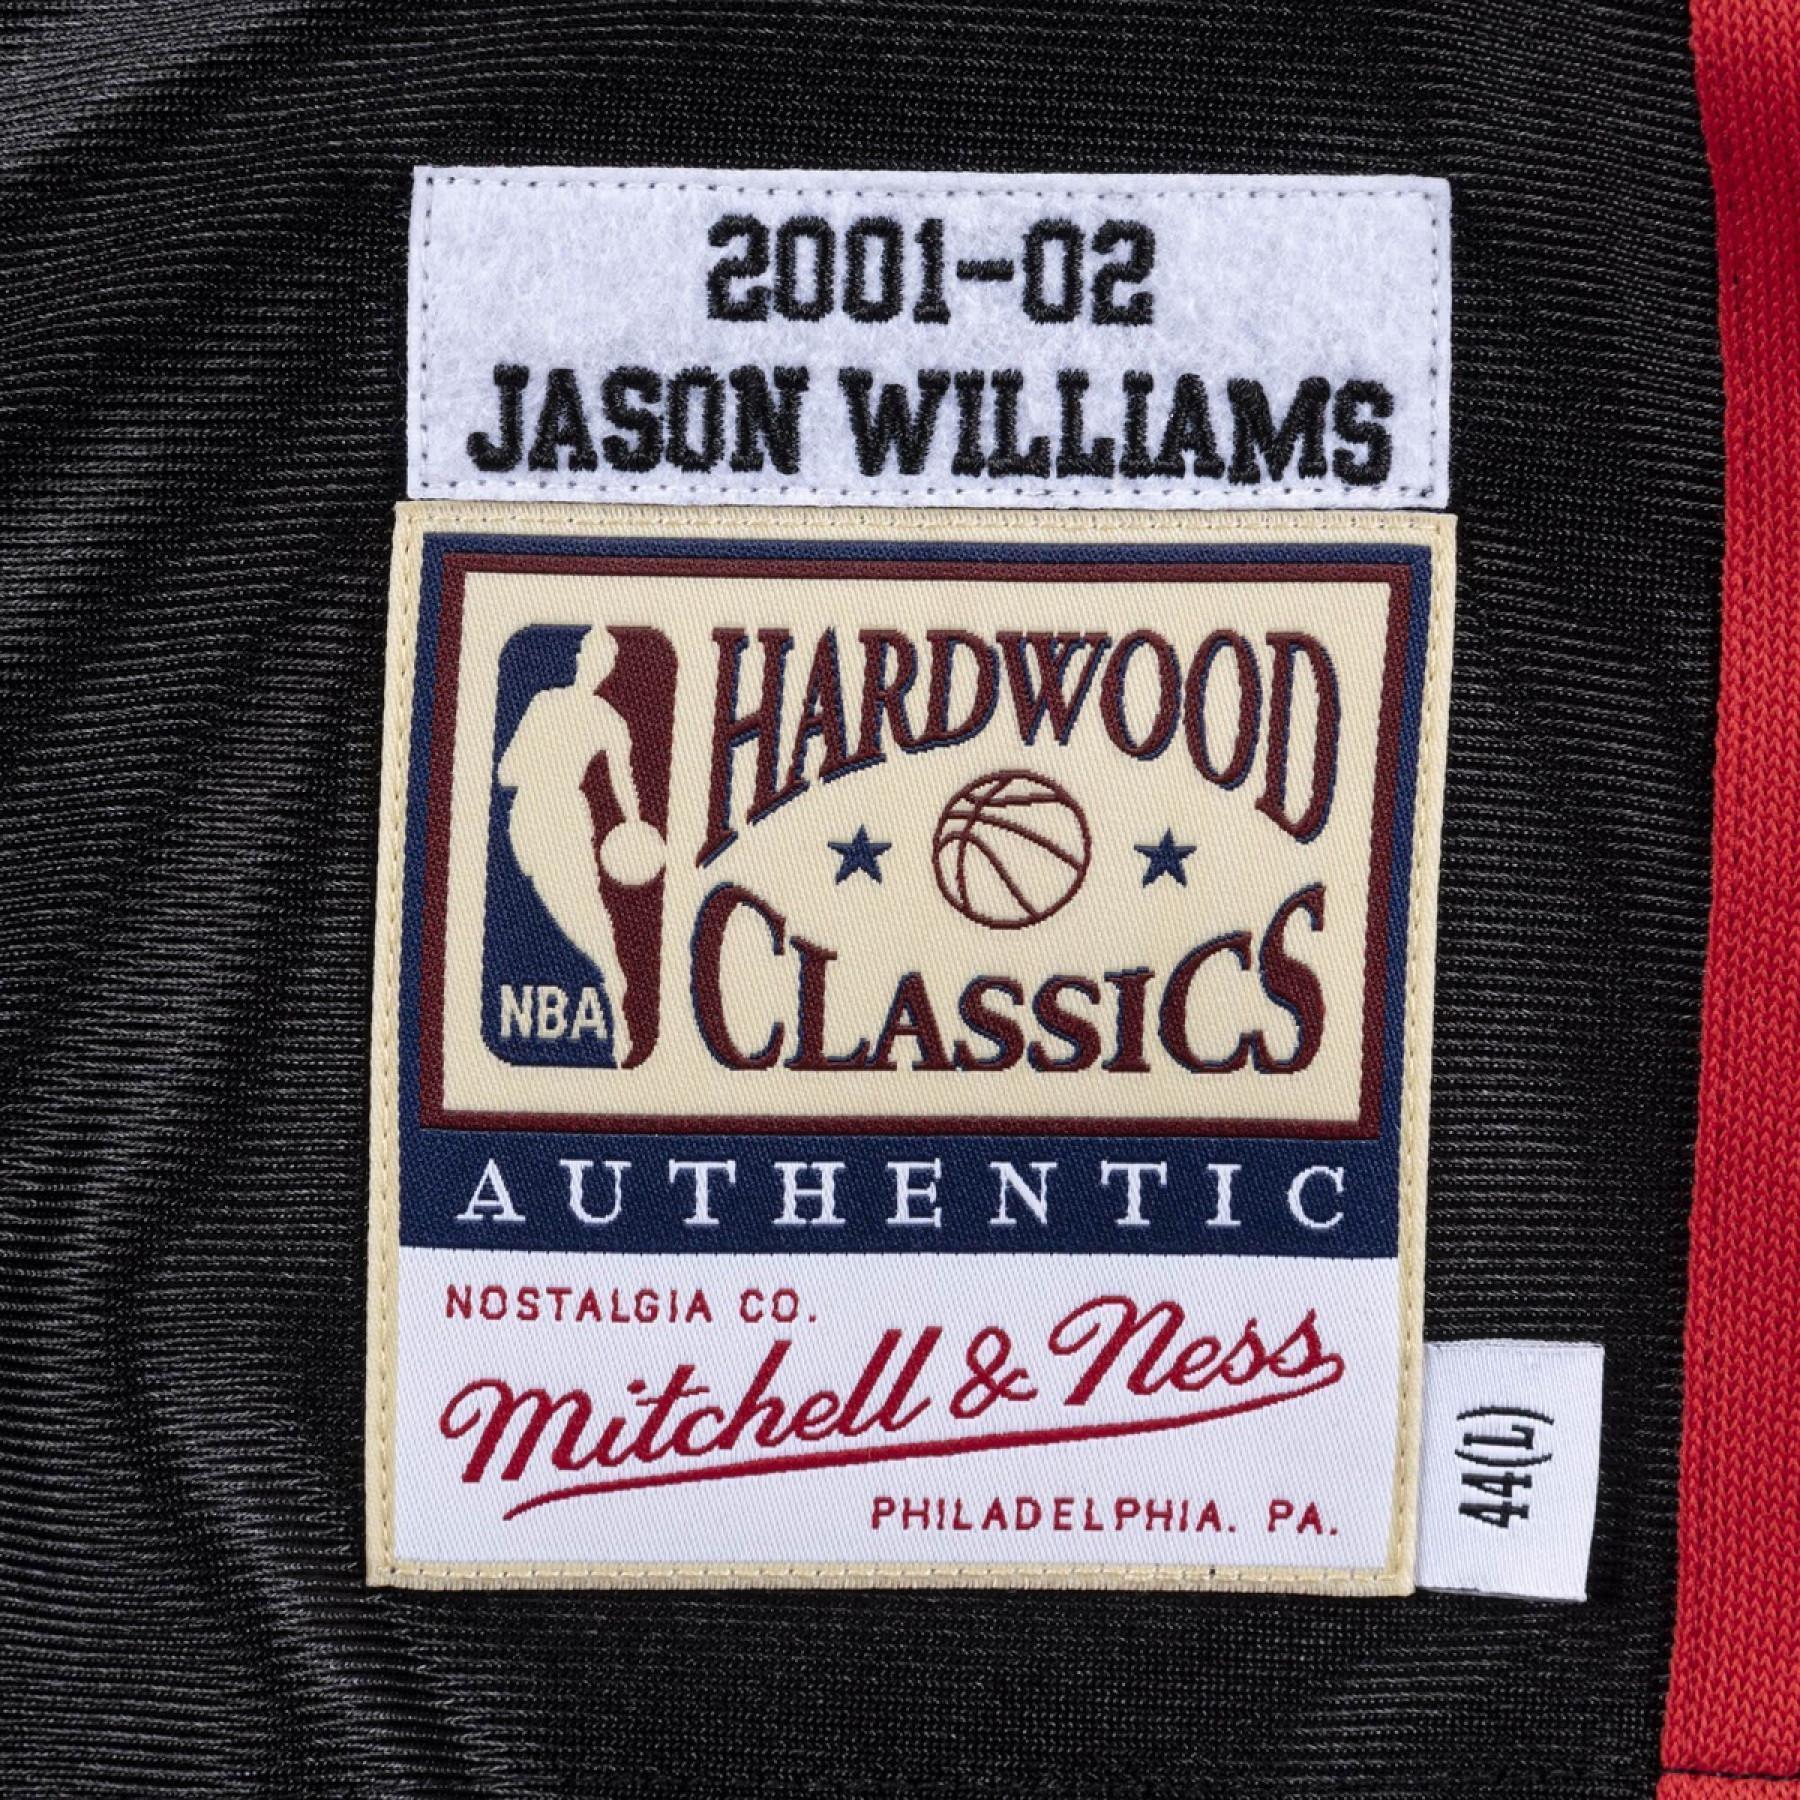 Autentyczna koszulka Memphis Grizzlies nba Jason Williams